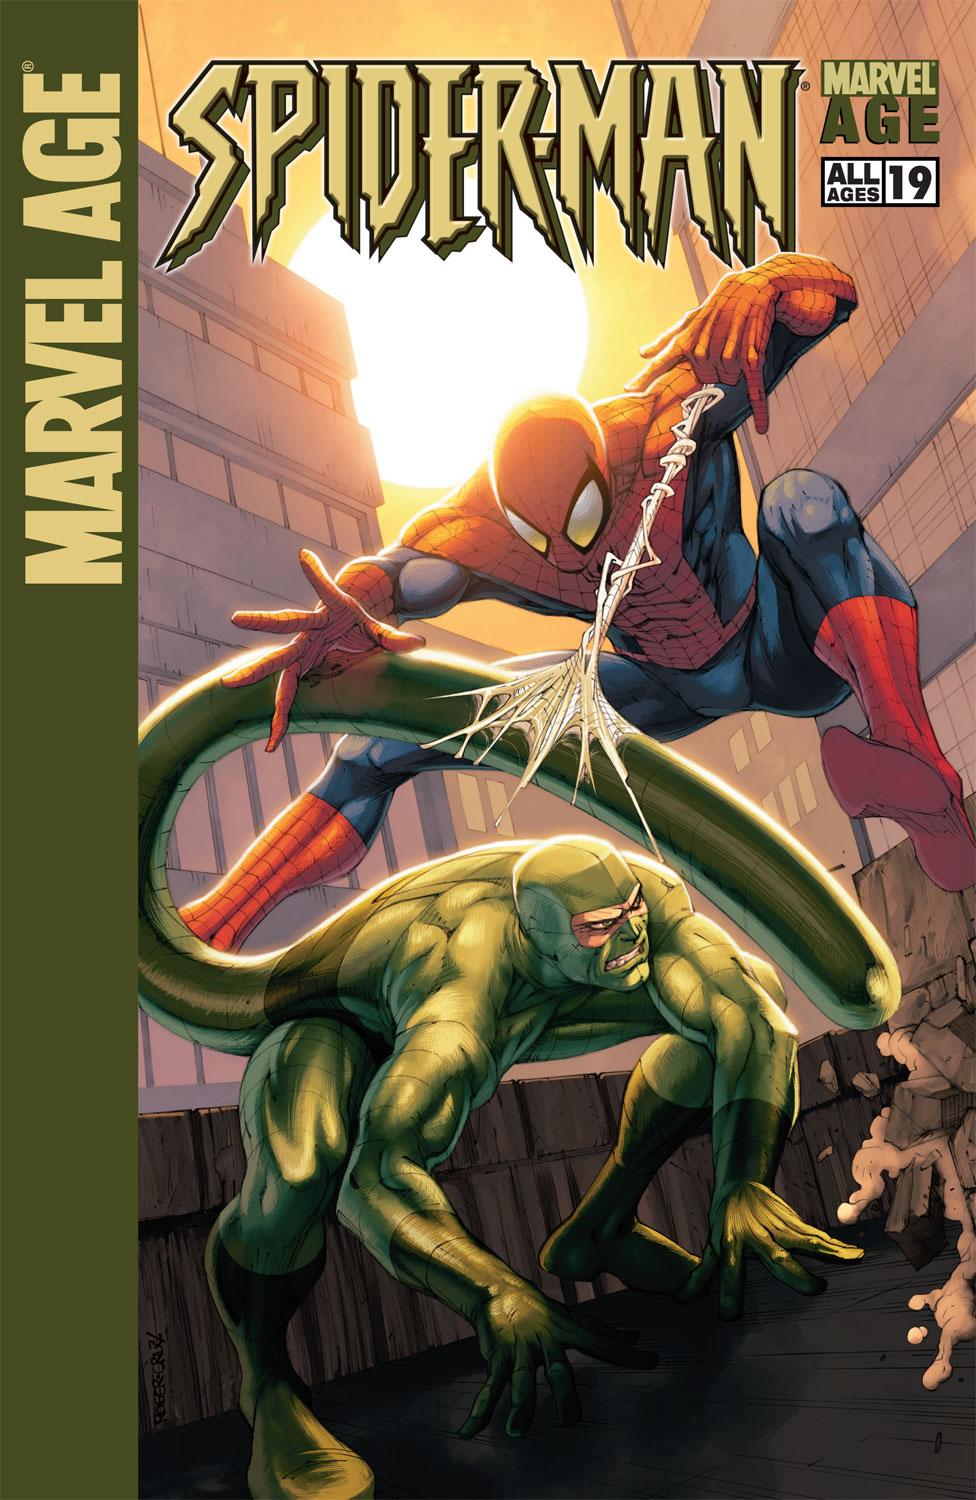 Marvel Age Spider-Man (2004) #19